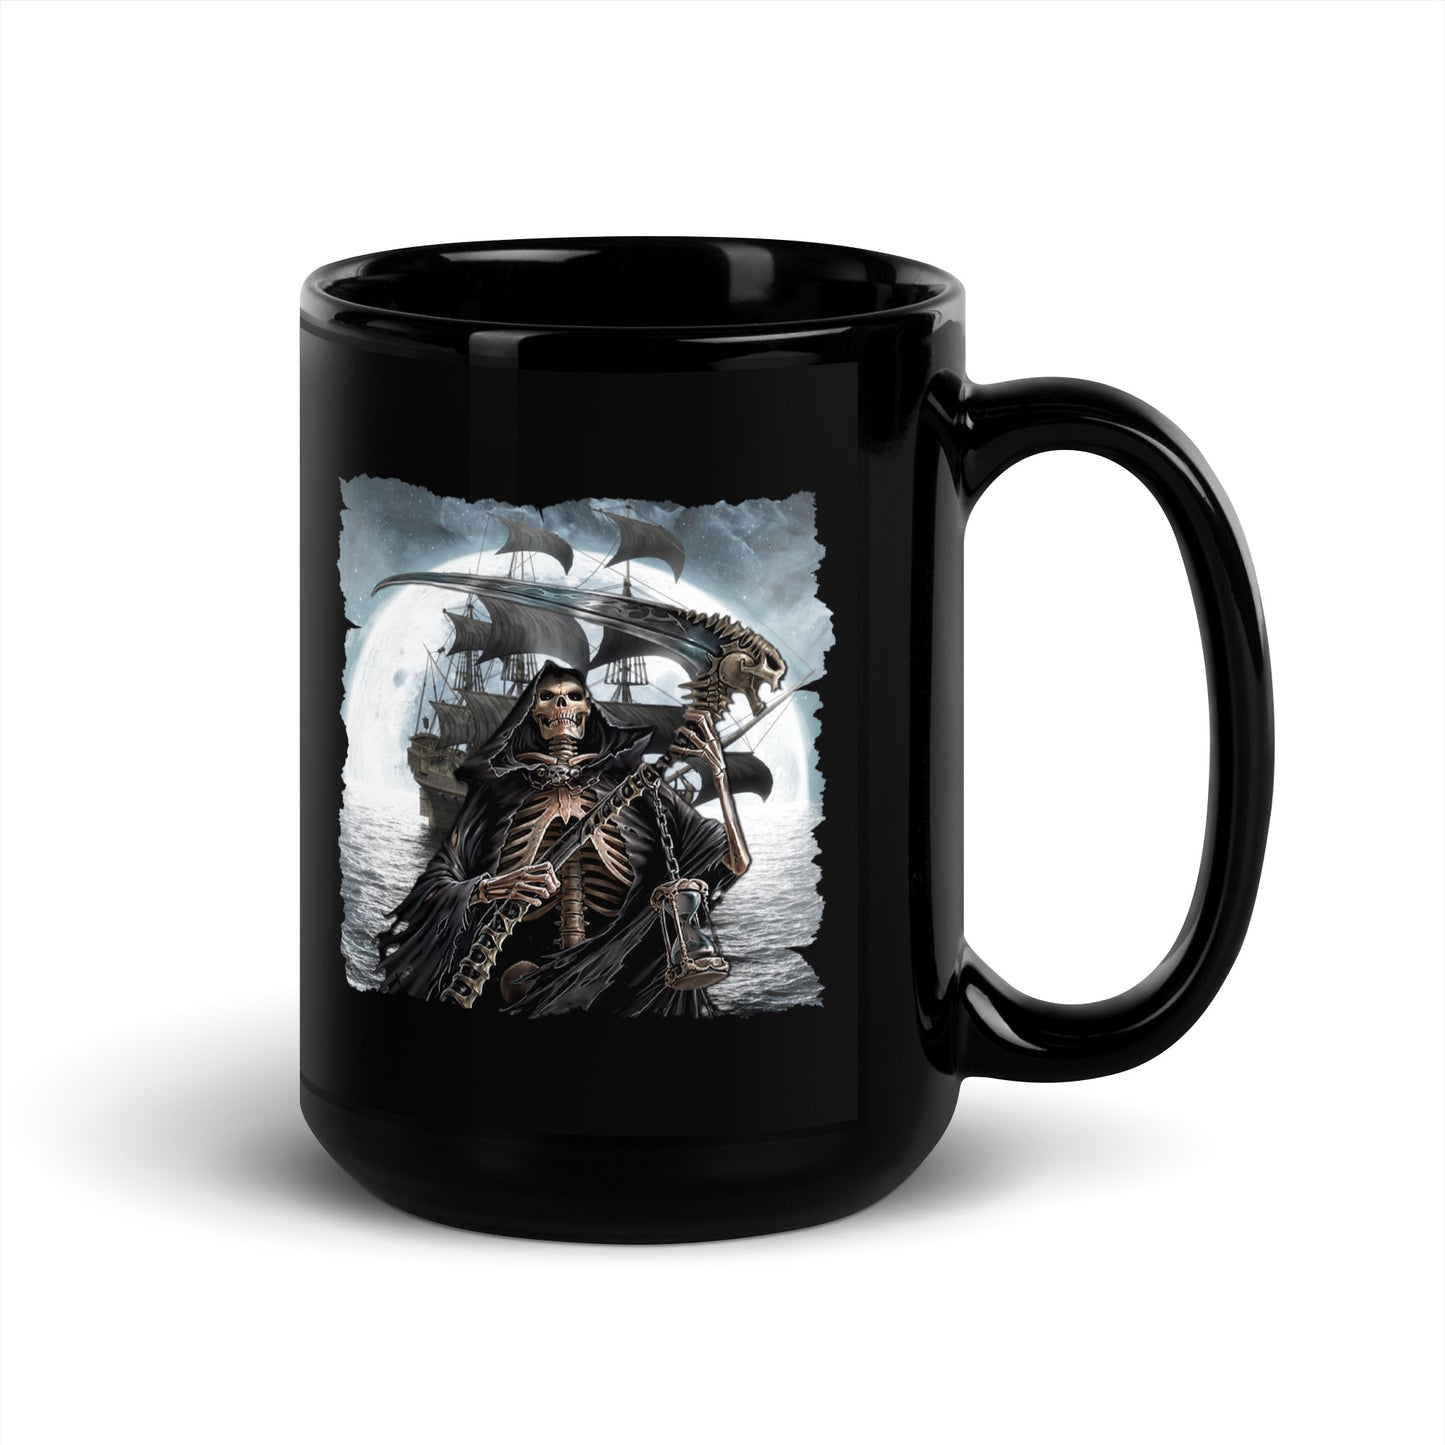 The Reaper Coffee Mug